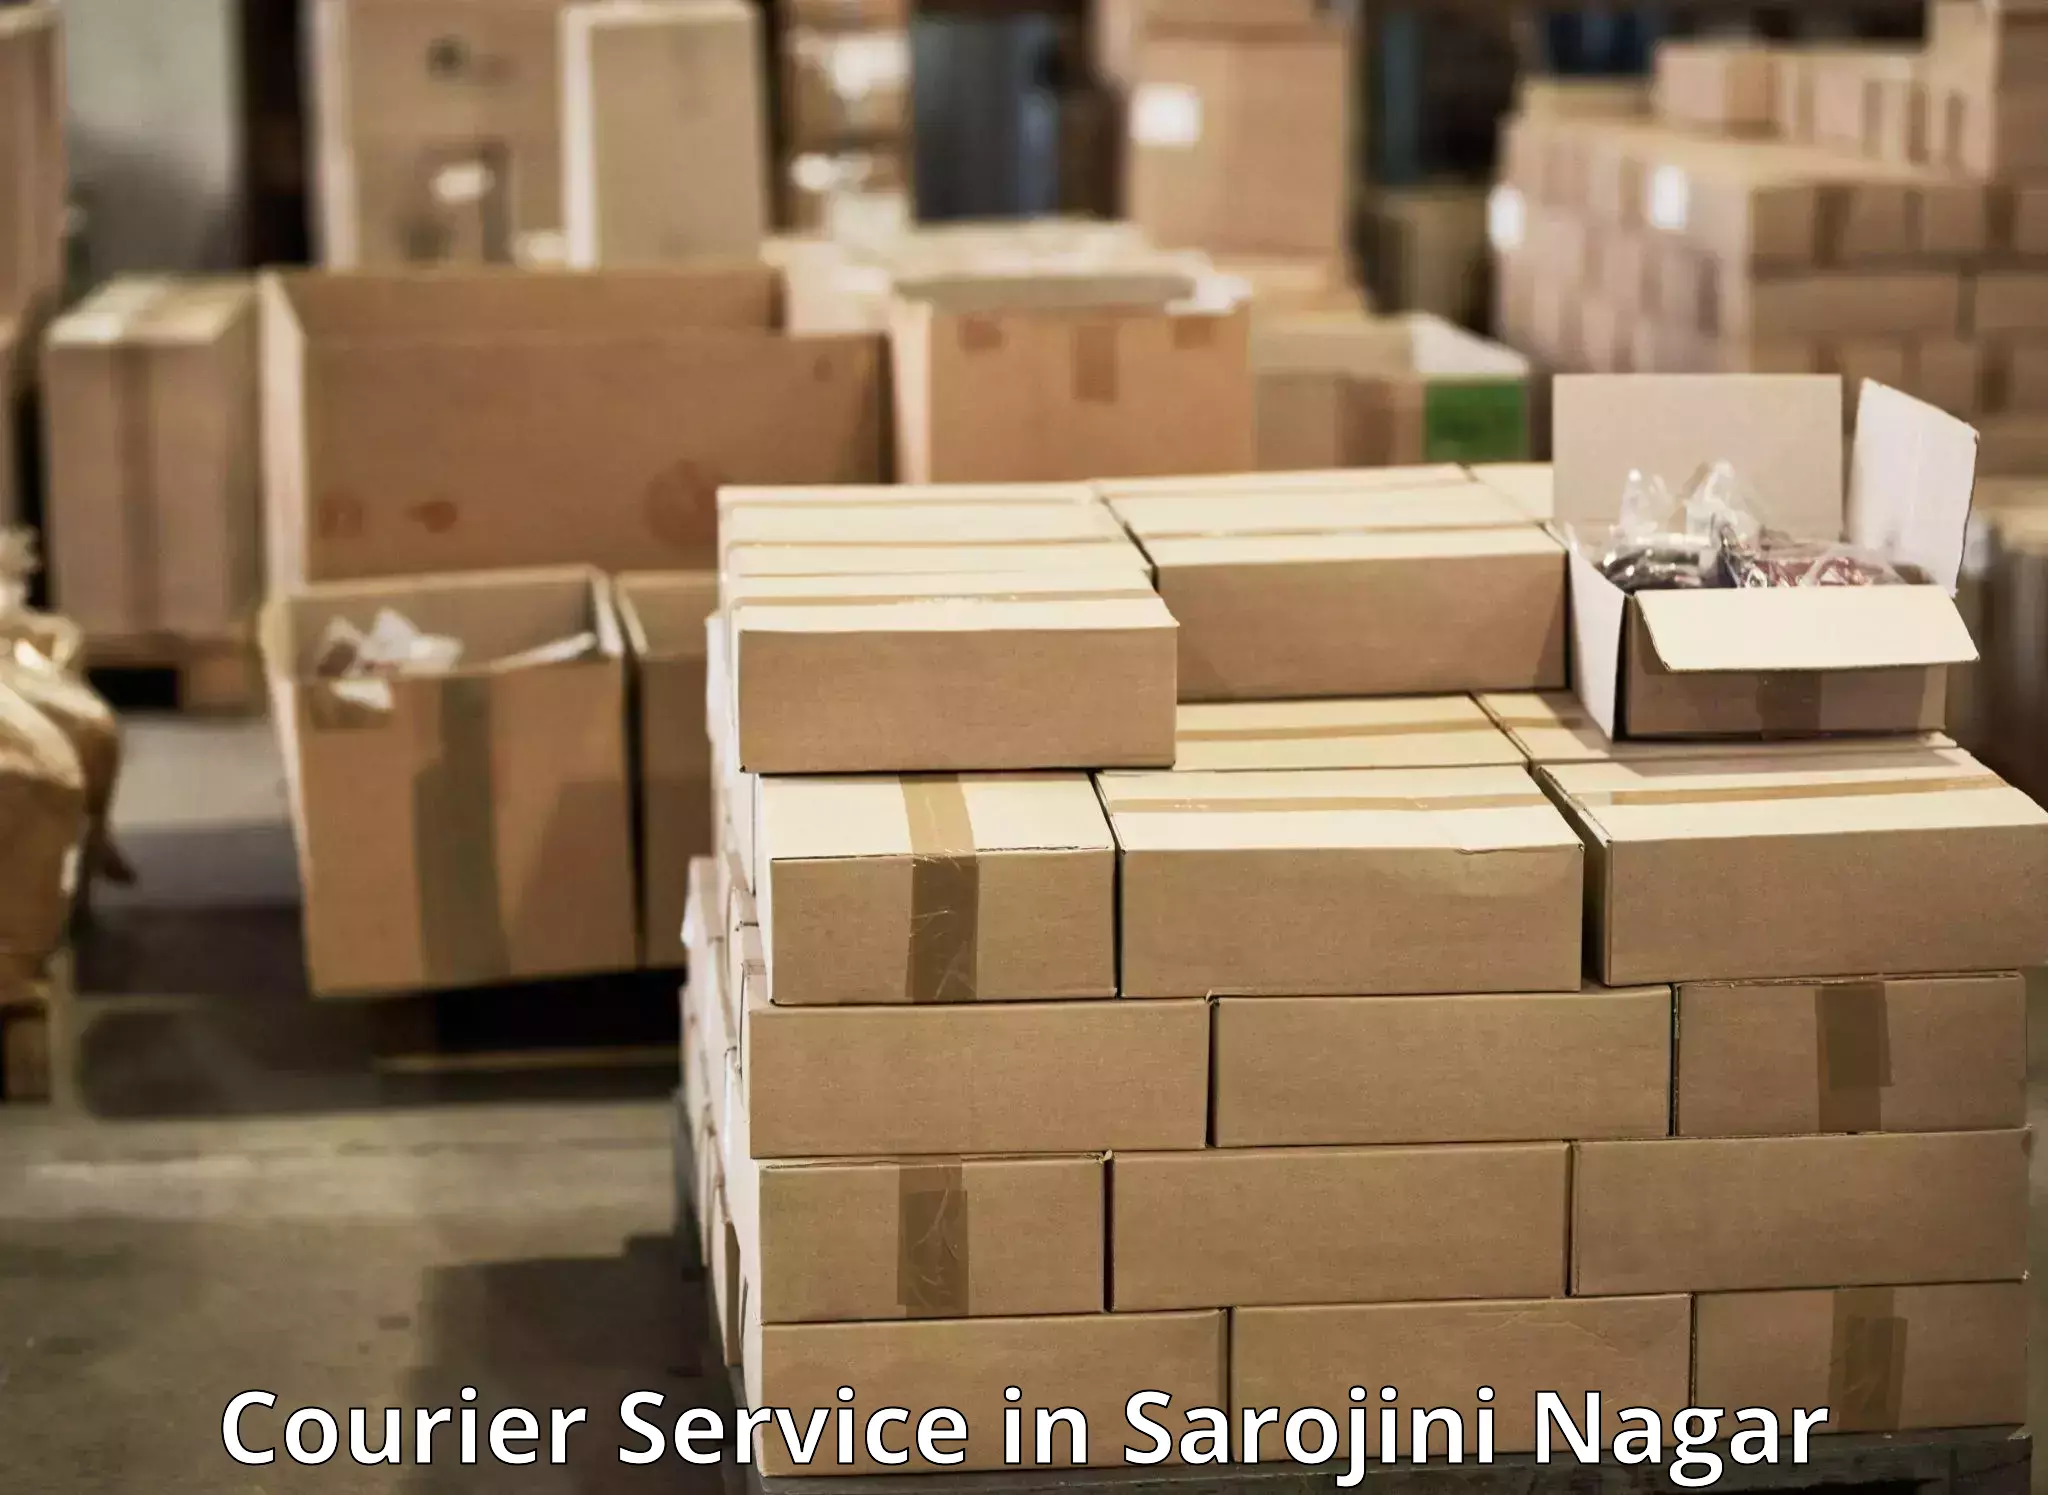 Logistics efficiency in Sarojini Nagar